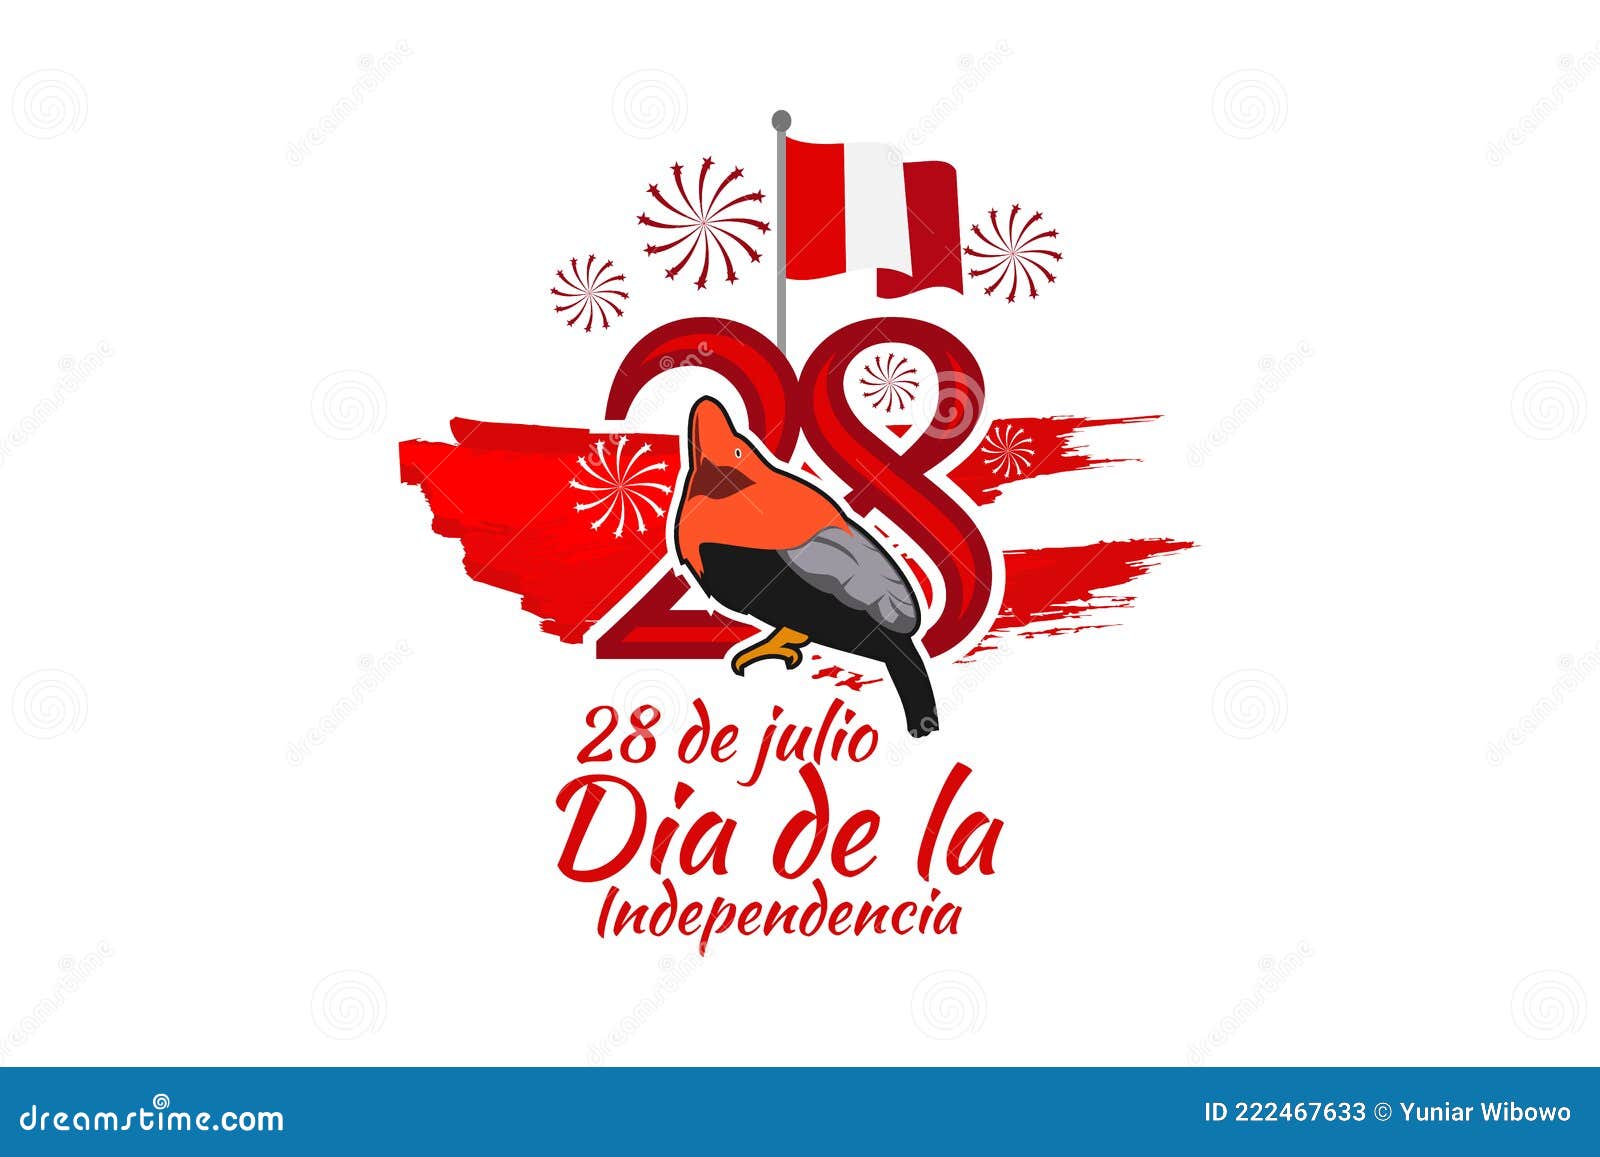 translate: july 28, independence day dia de la independencia of peru